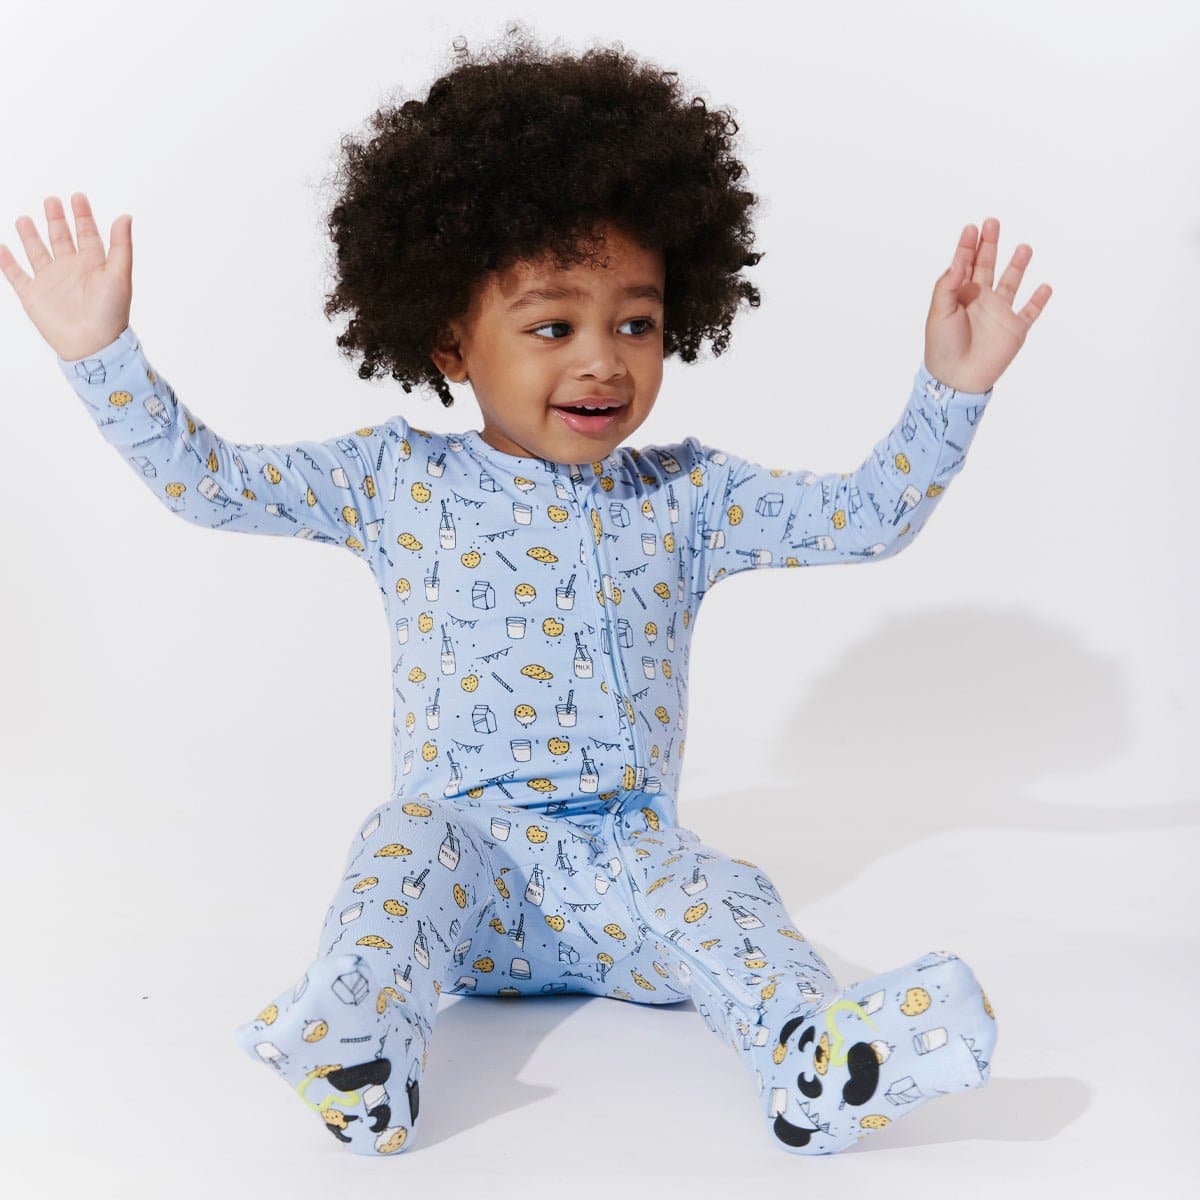 Matching Mom & Baby Sleepwear - Milk & Baby – Milk & Baby